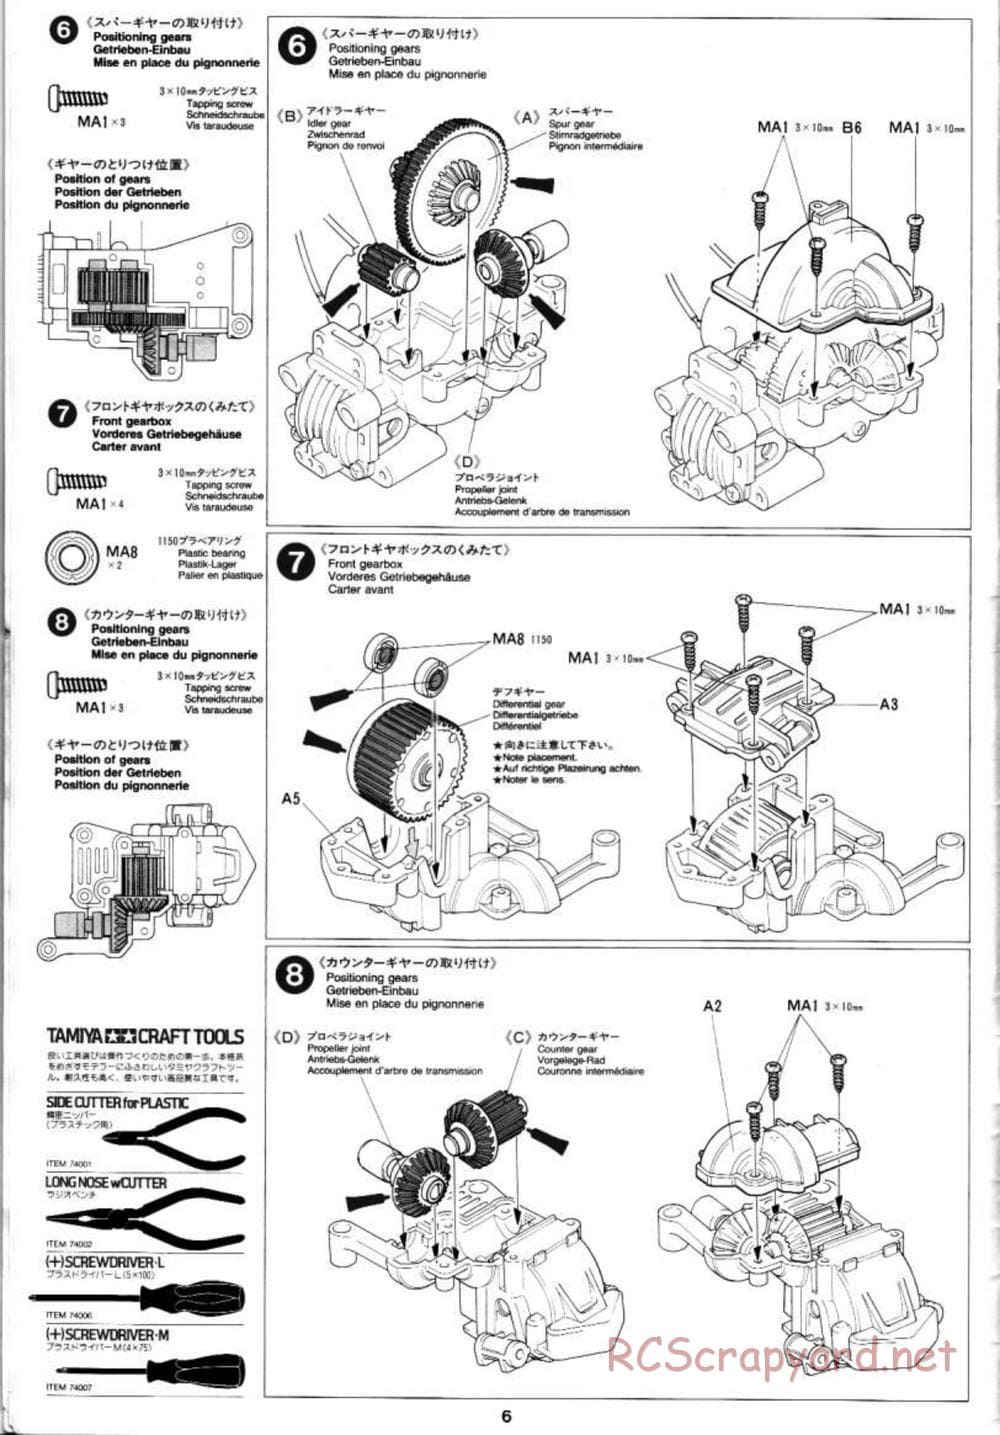 Tamiya - Blazing Star Chassis - Manual - Page 6